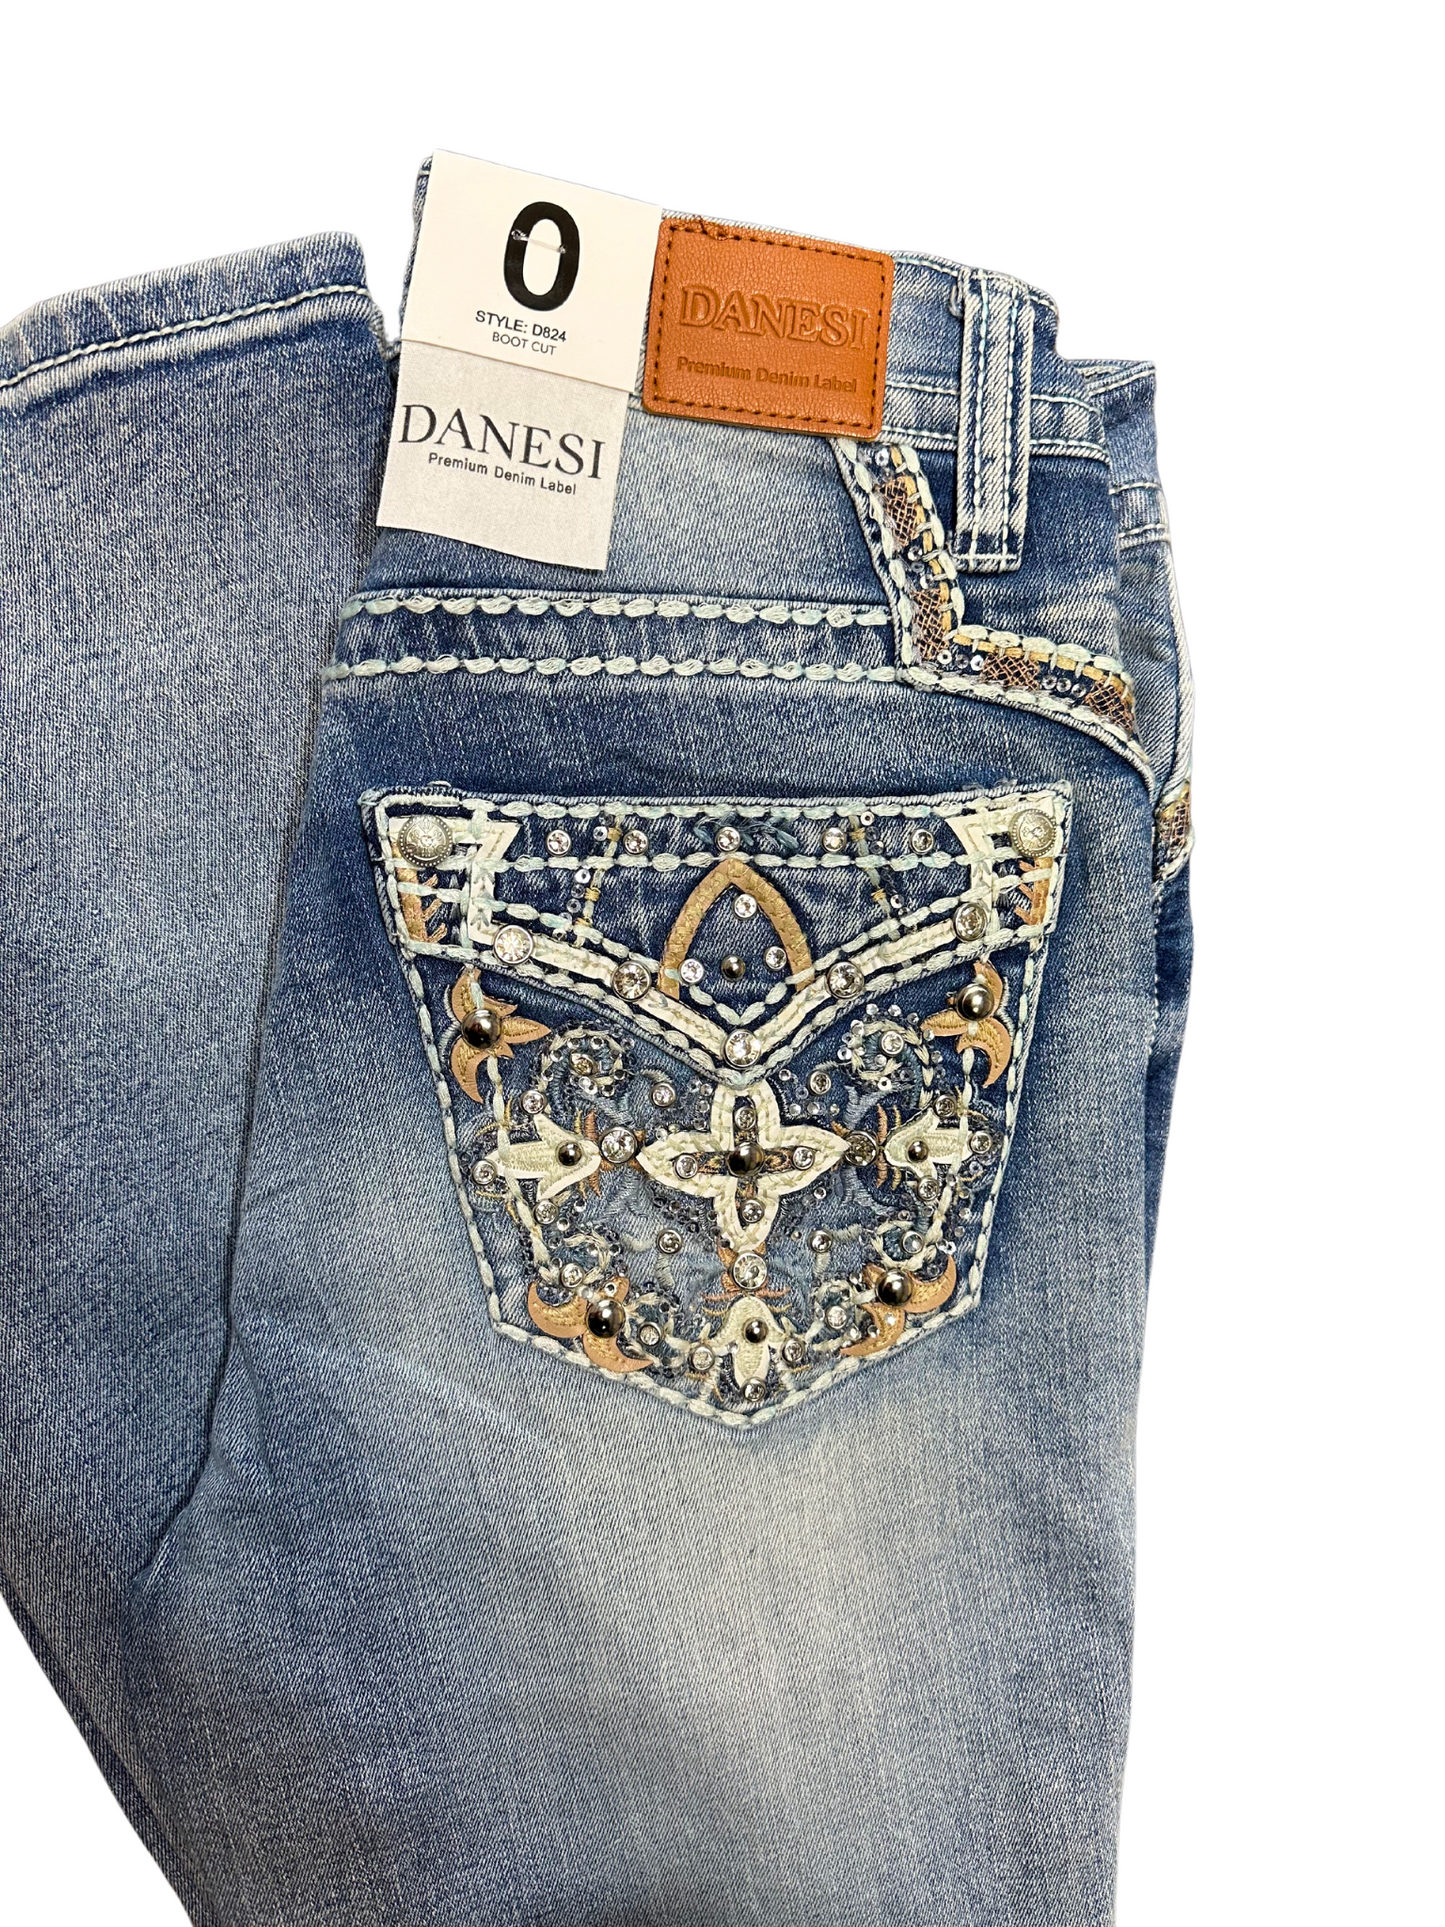 Danesi Floral Bling Pocket Bootcut Jean